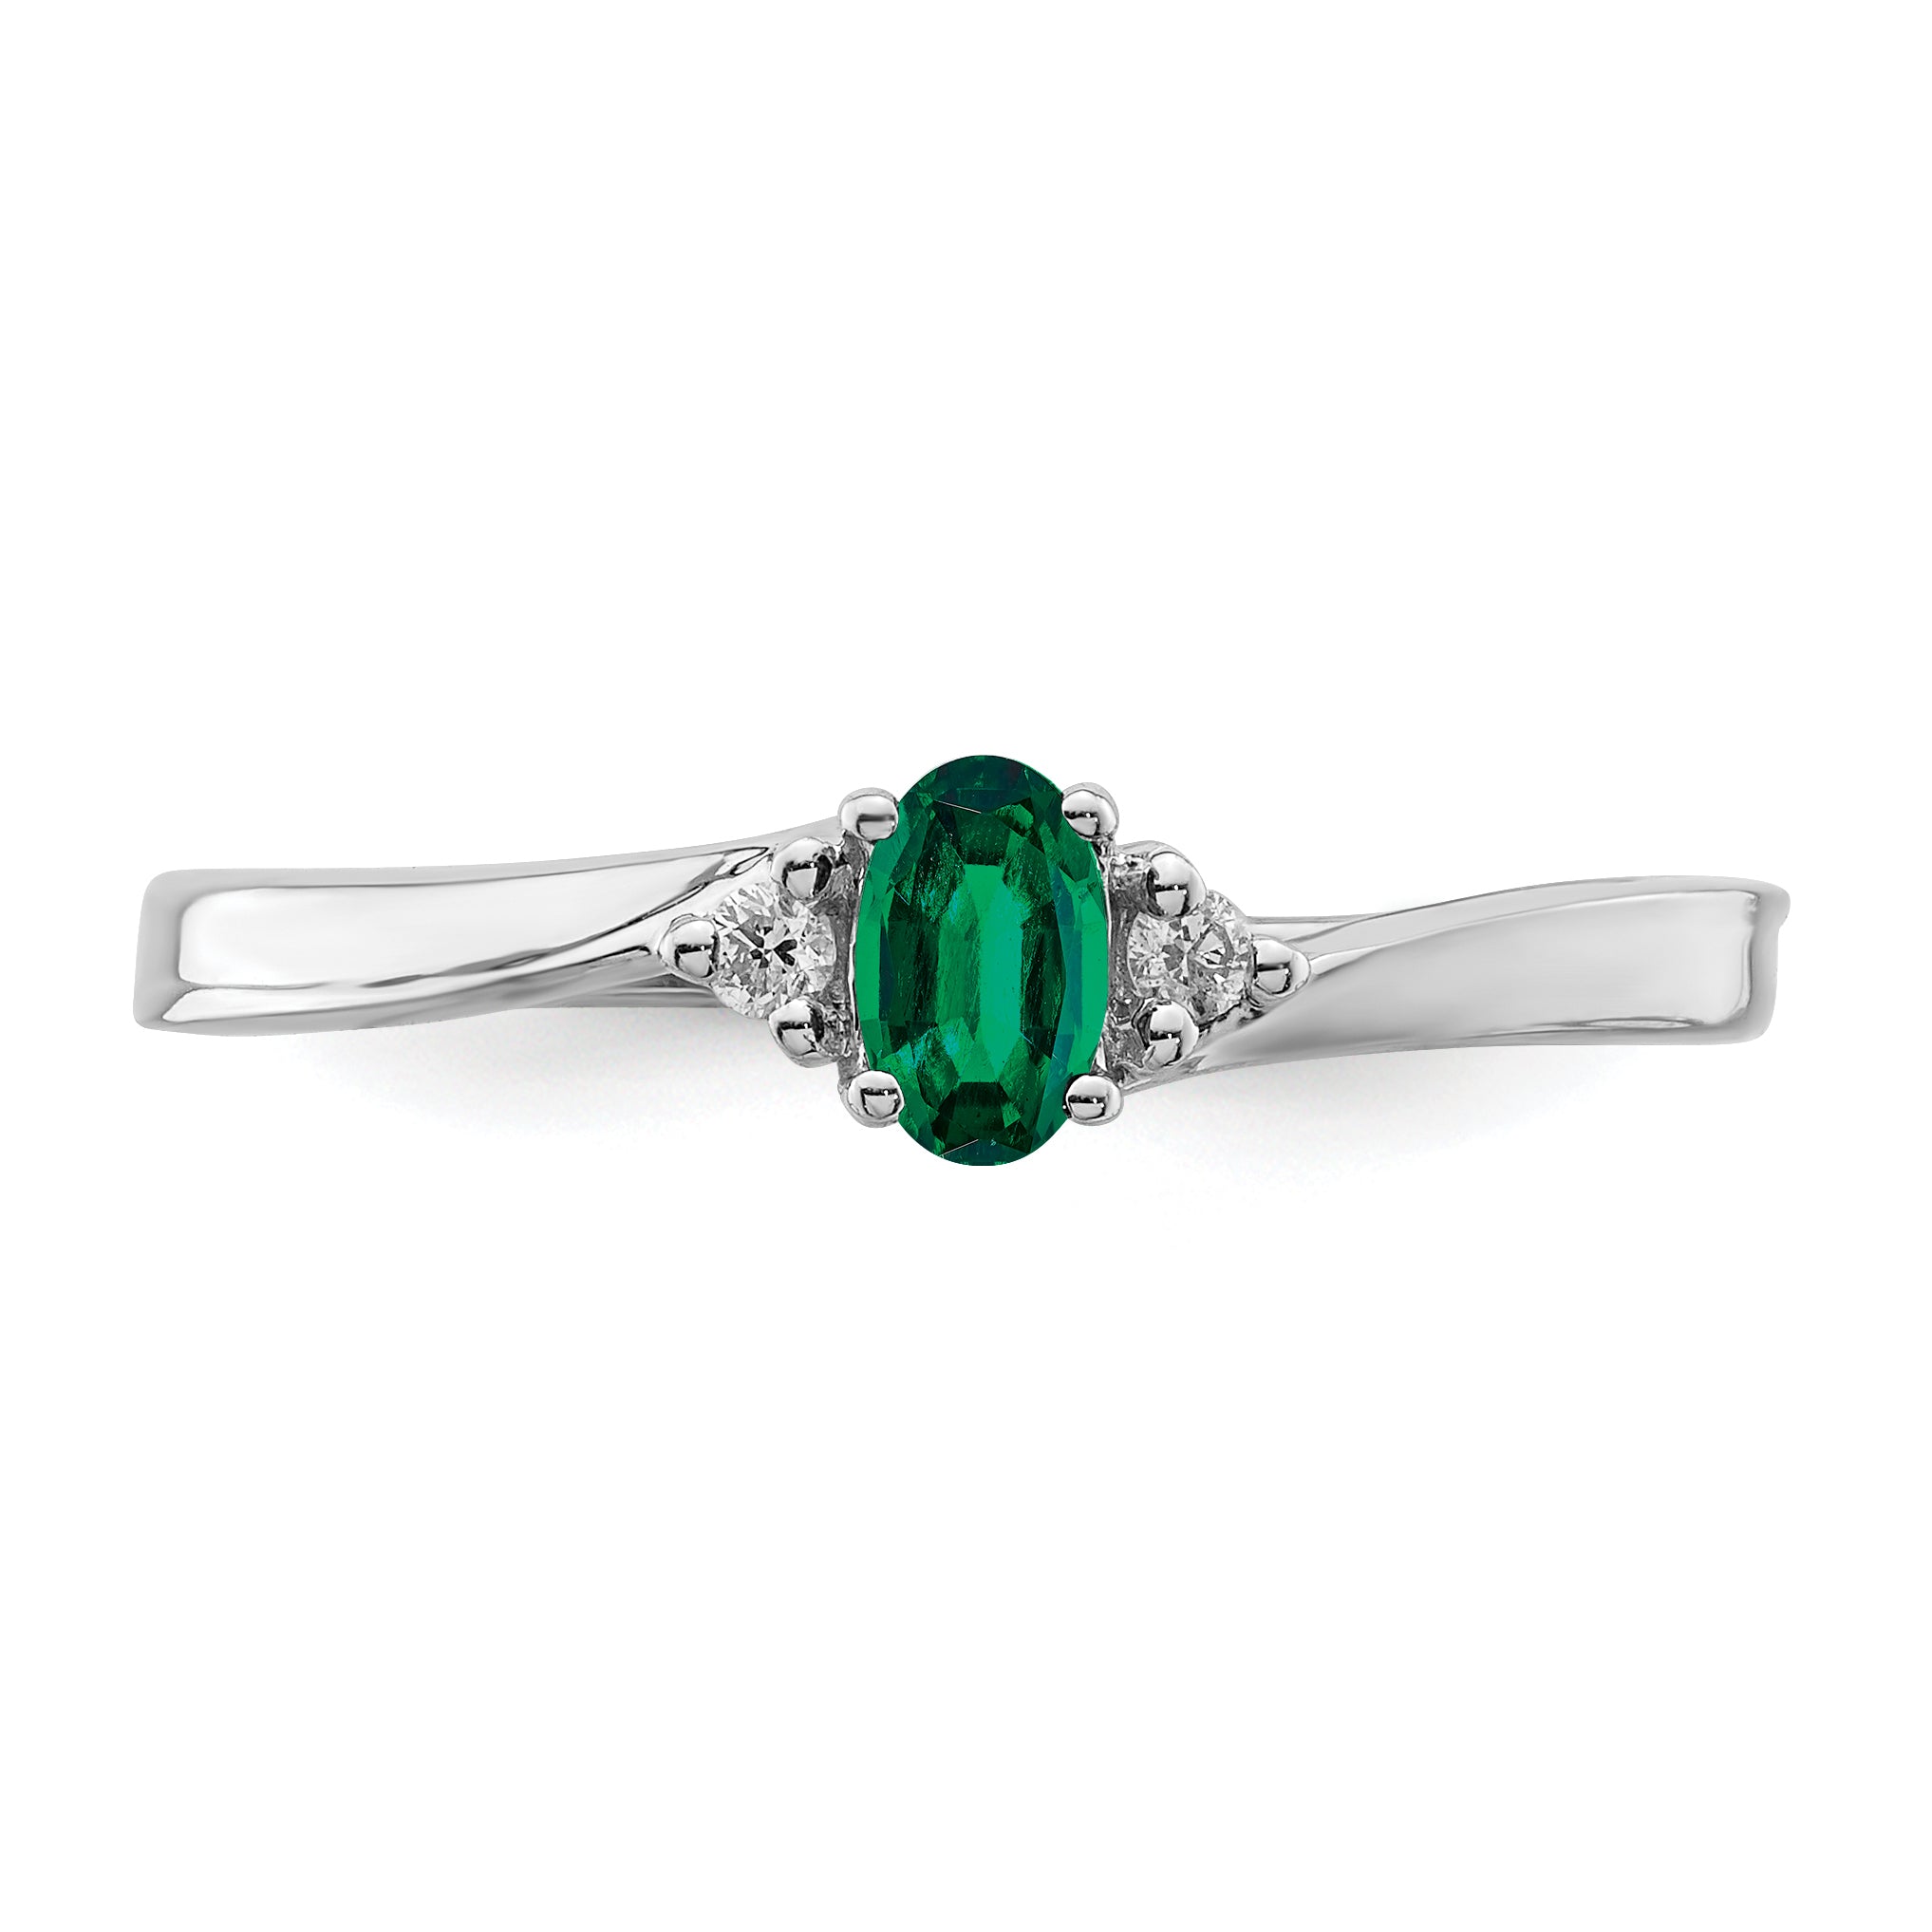 Sterling Silver Rhod-plated Created Emerald/Diamond Birthstone Ring